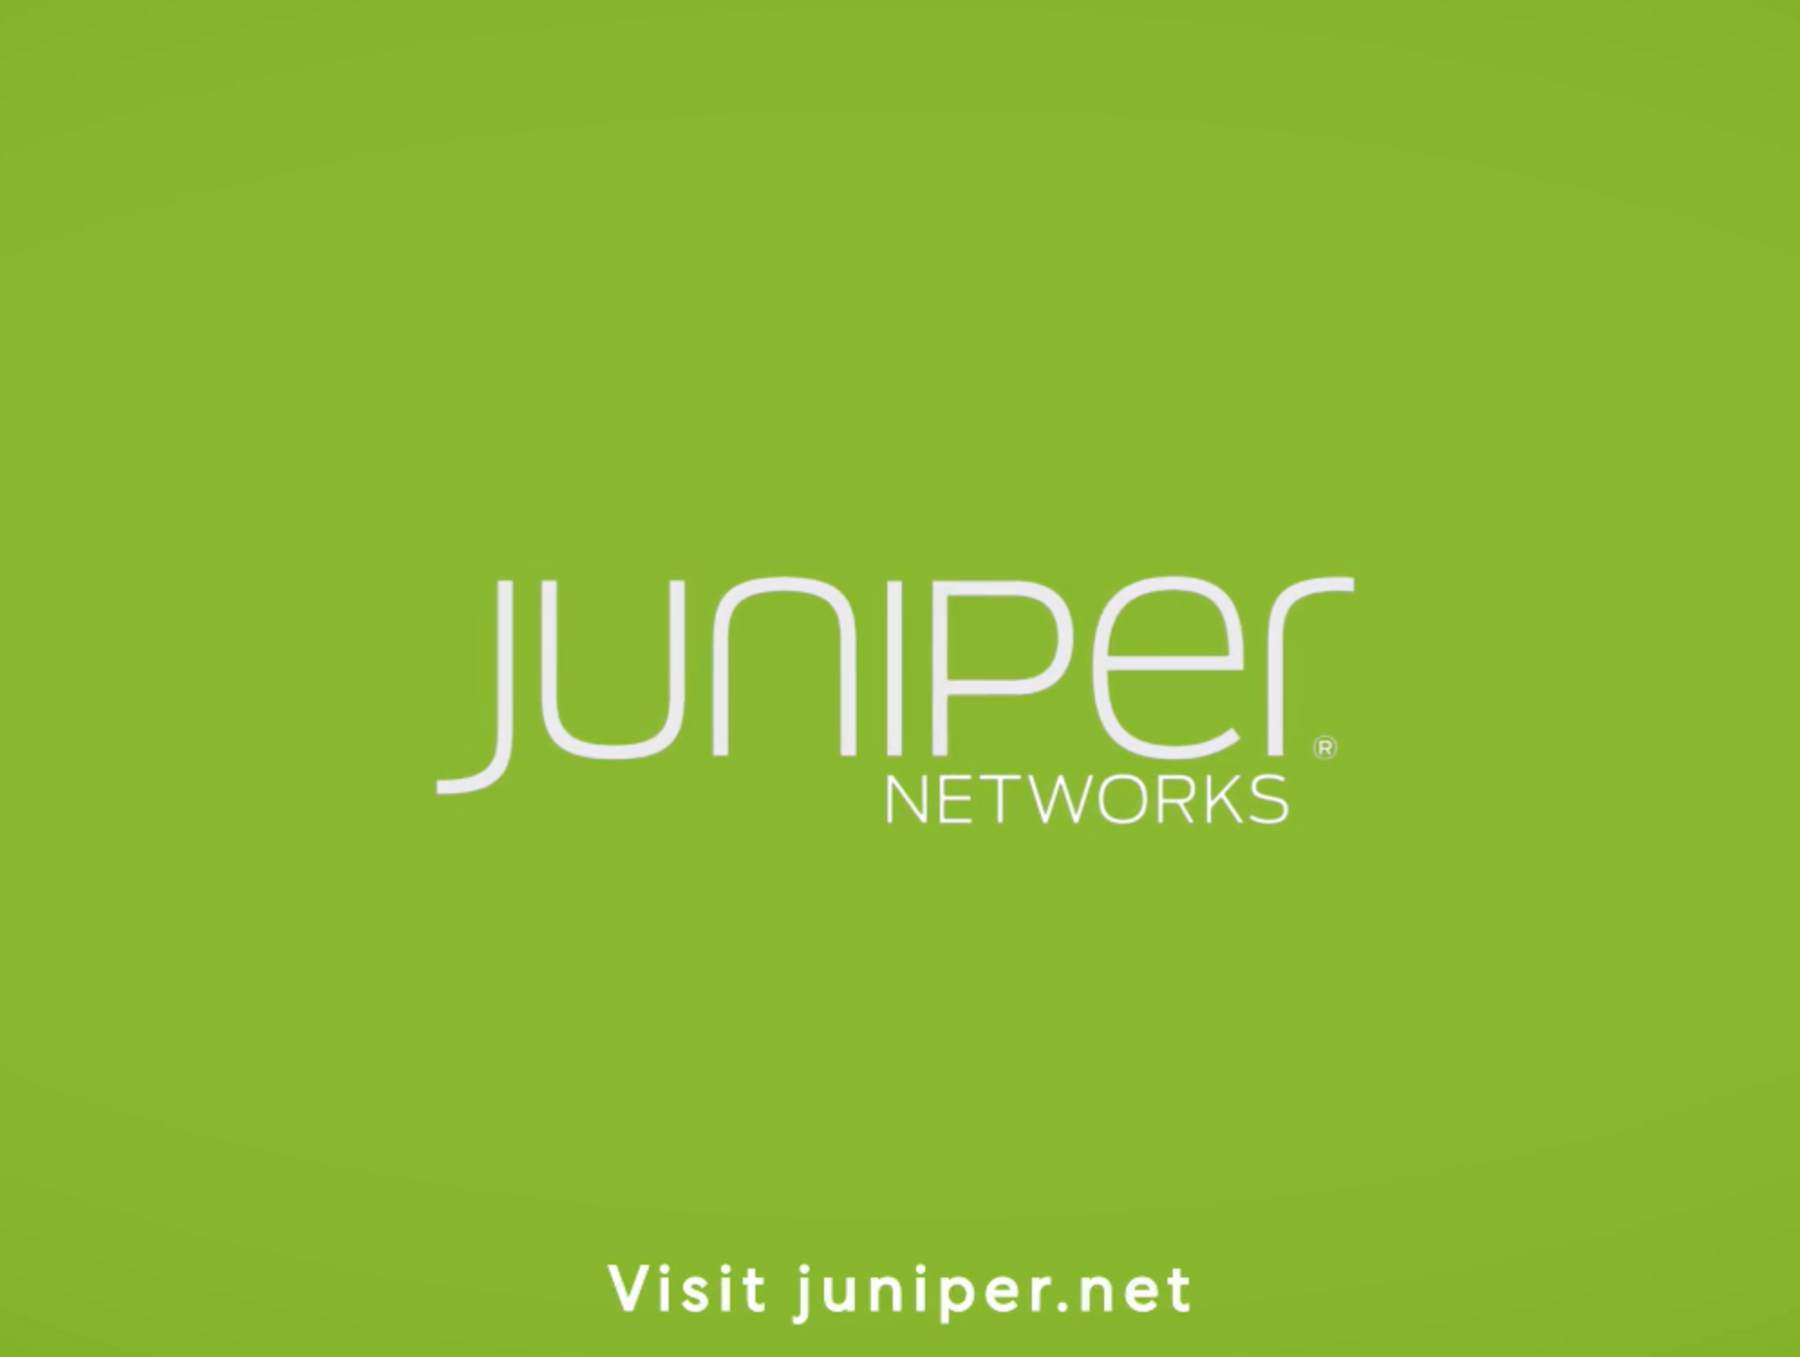 Juniper networks what is it julie collins alcon